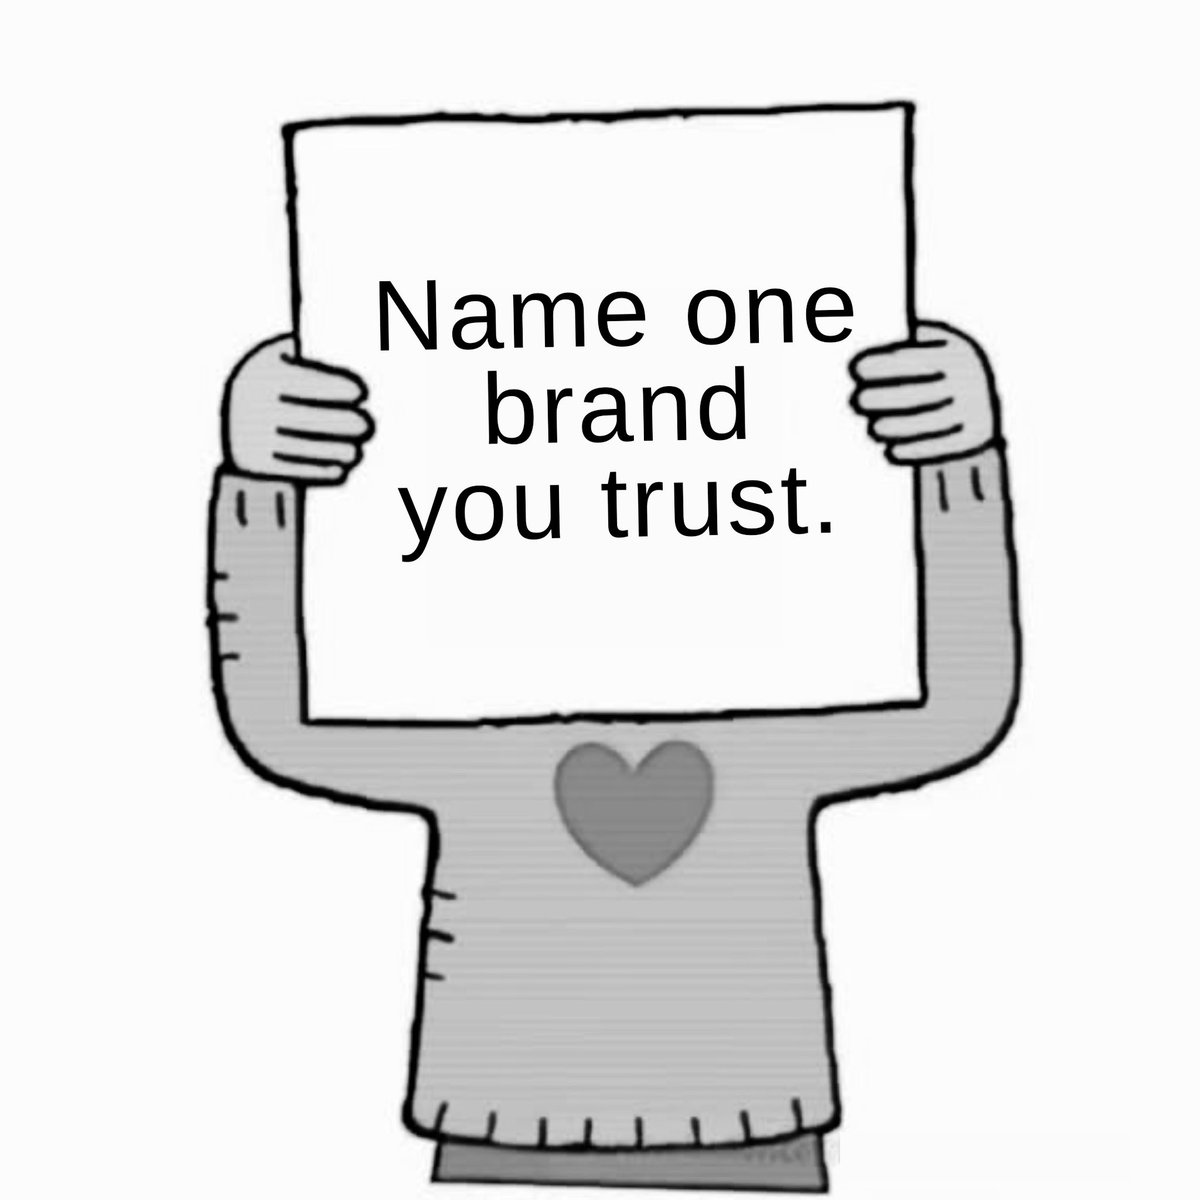 Tag CA/CS/CMA brand handle/s you trust on Twitter.